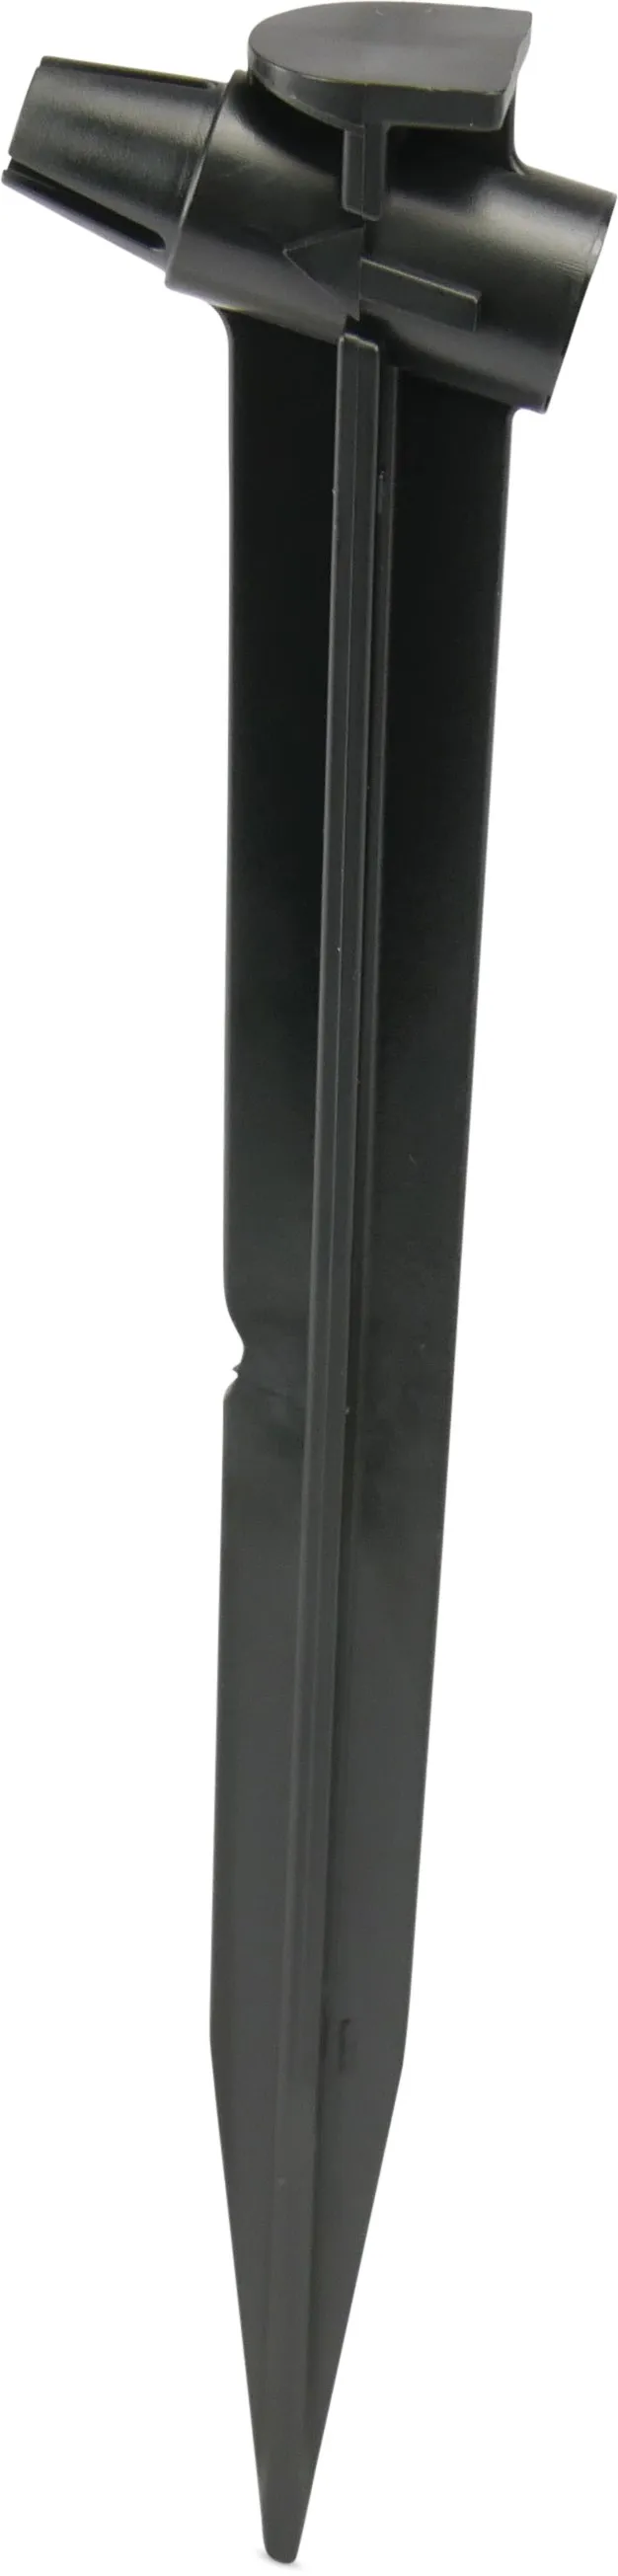 Rain Bird Stigarstolpe plast 6 mm 10cm svart type TS-025